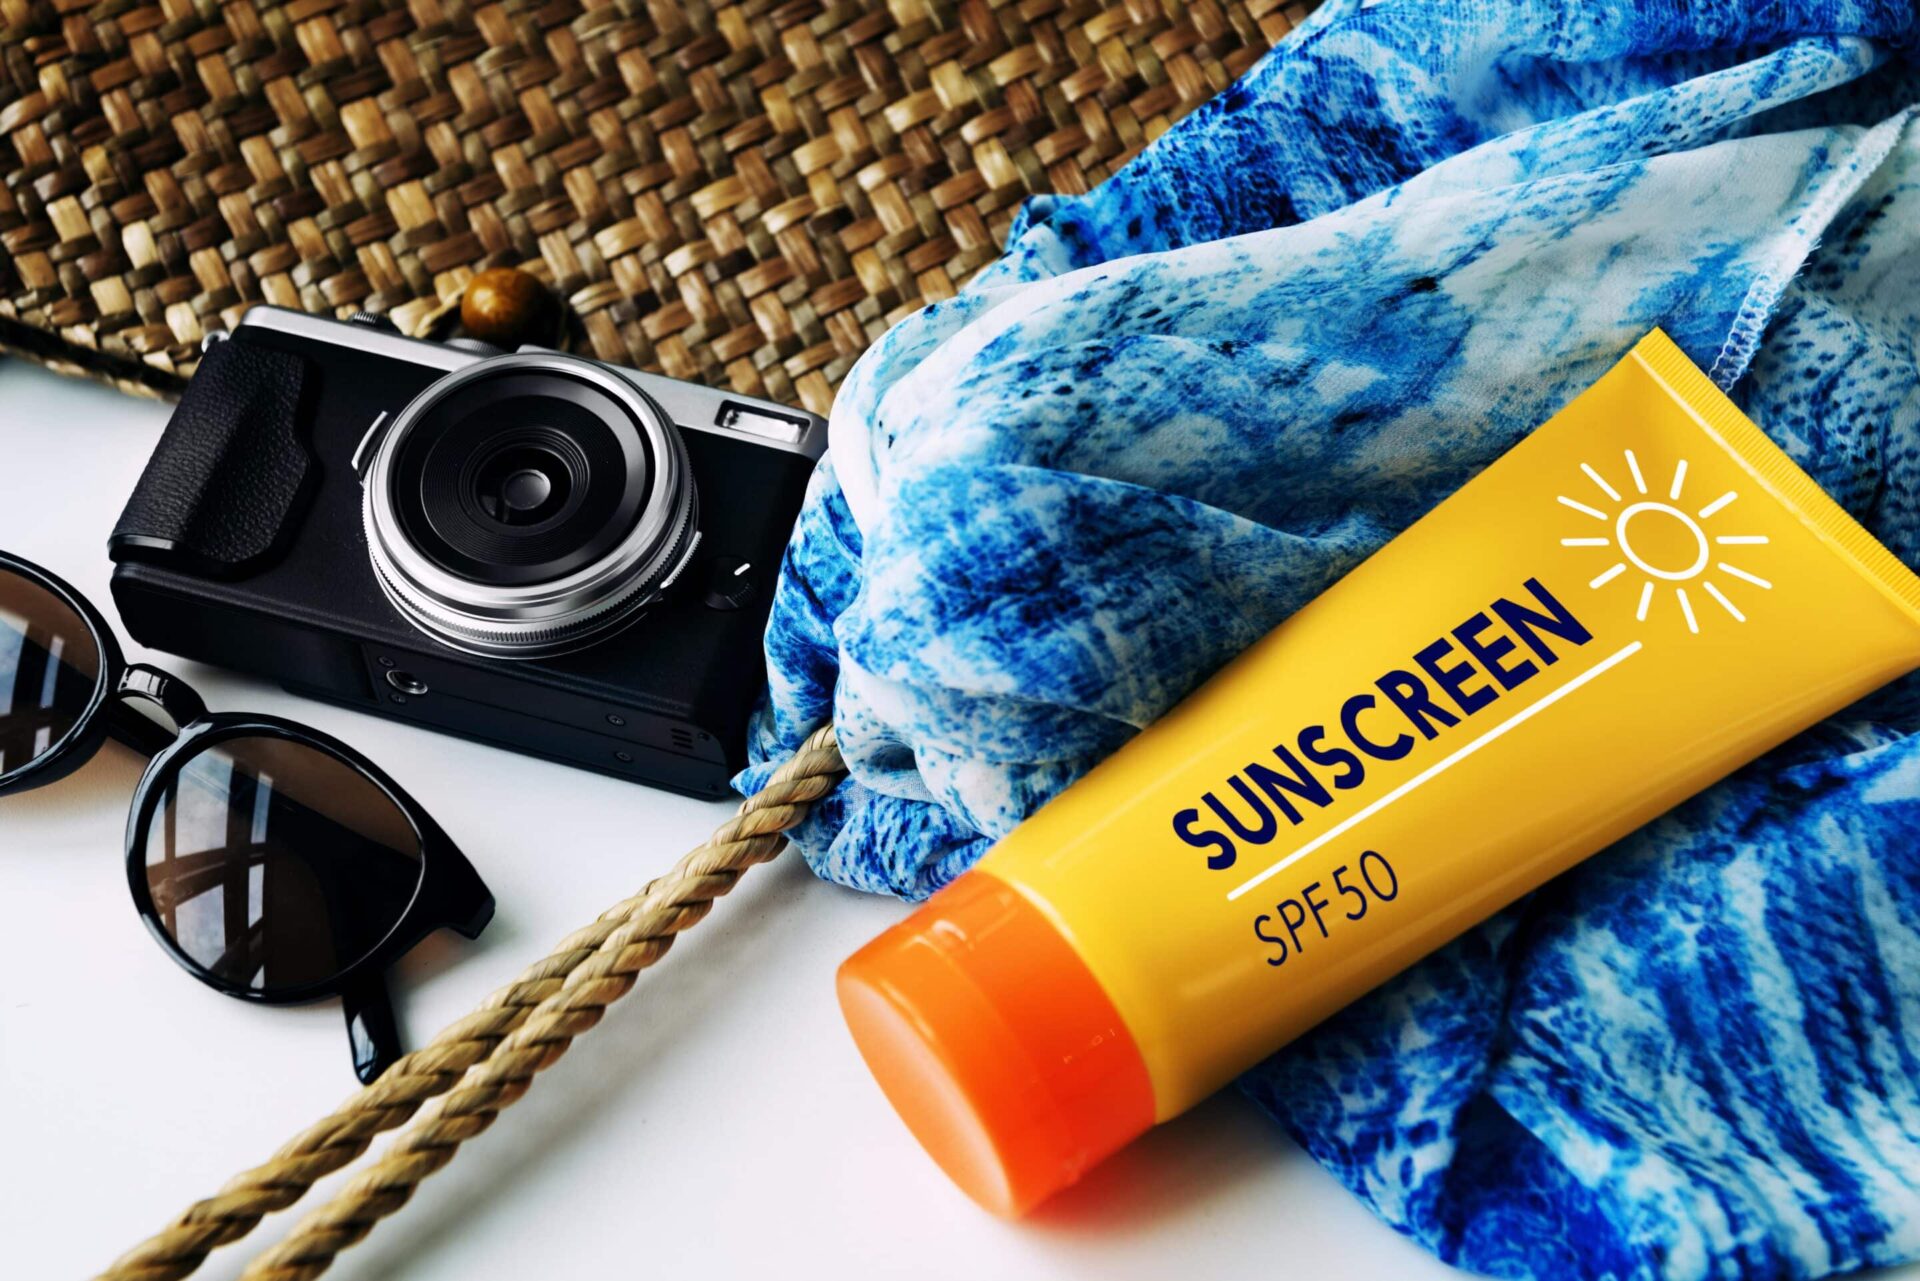 camera, sunscreen, towel, and sunglasses